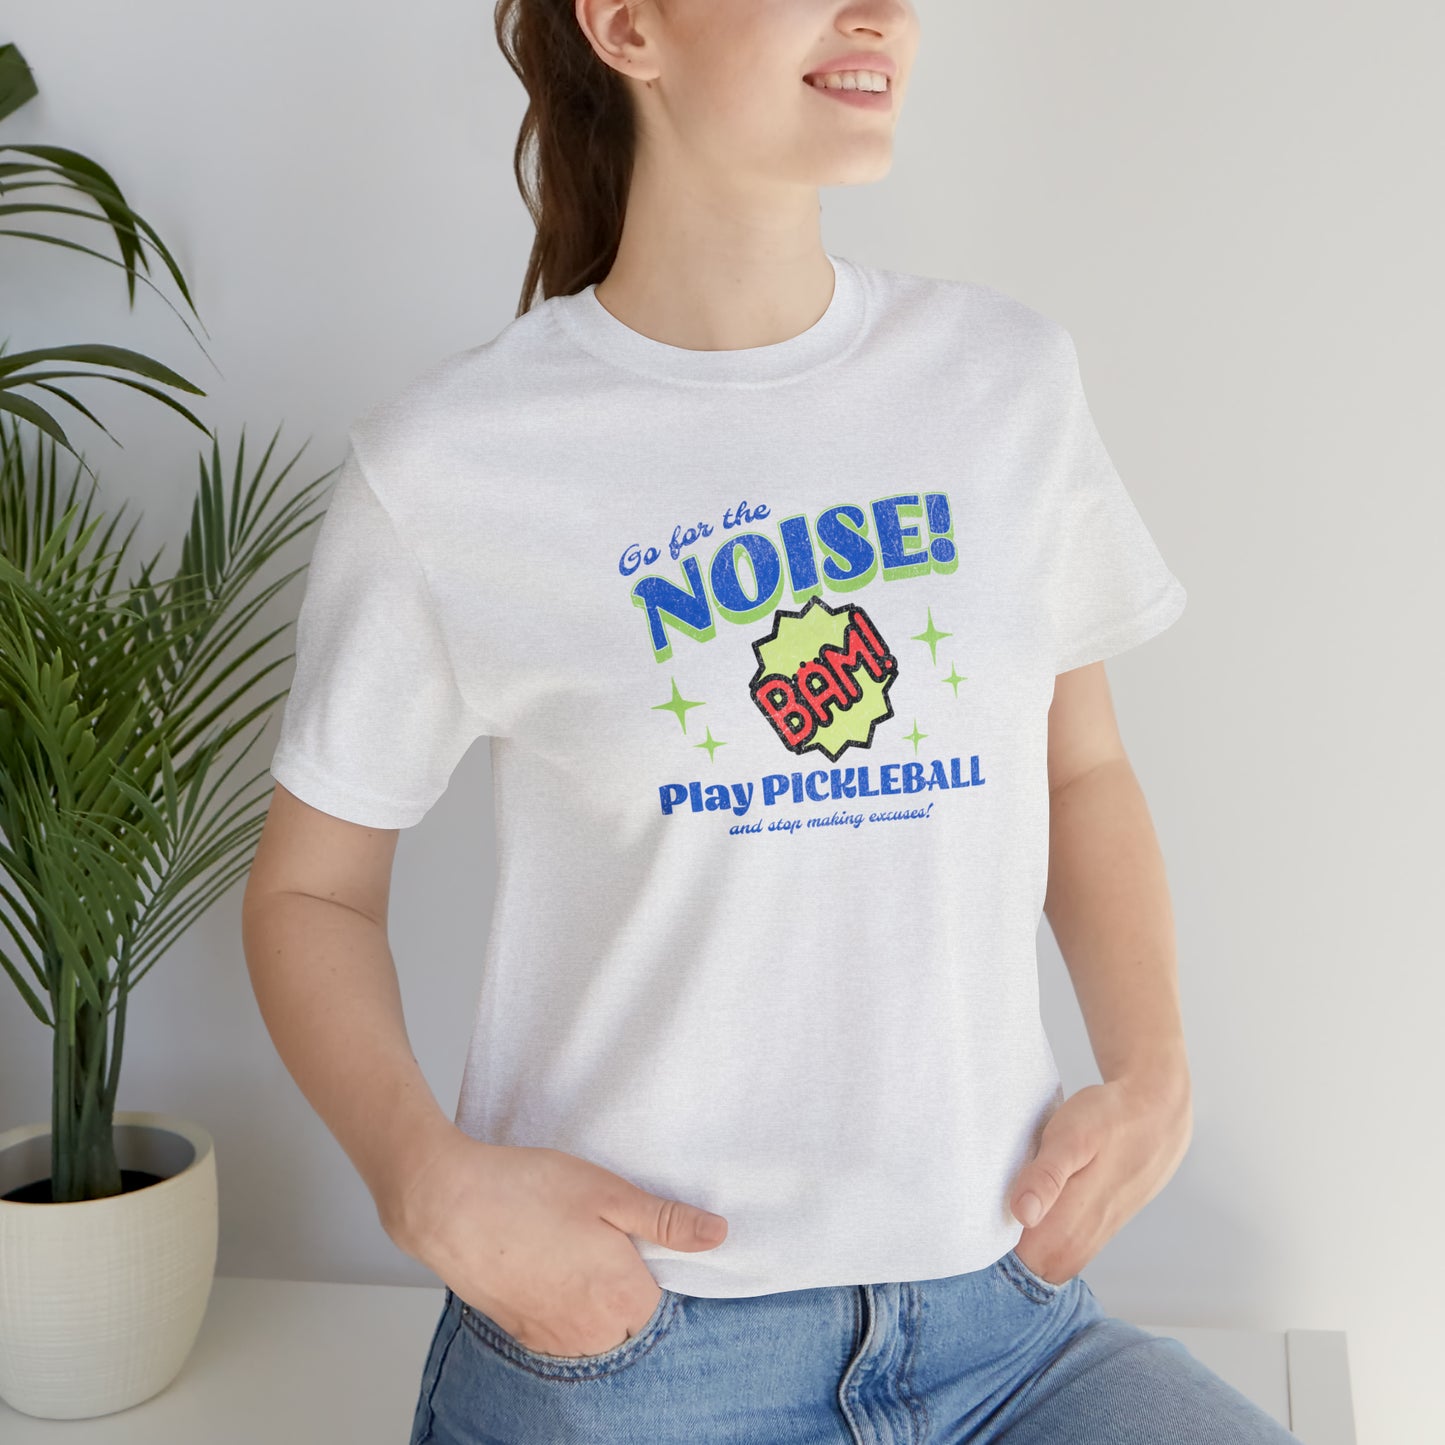 Go for the Noise - Play Pickleball T-Shirt